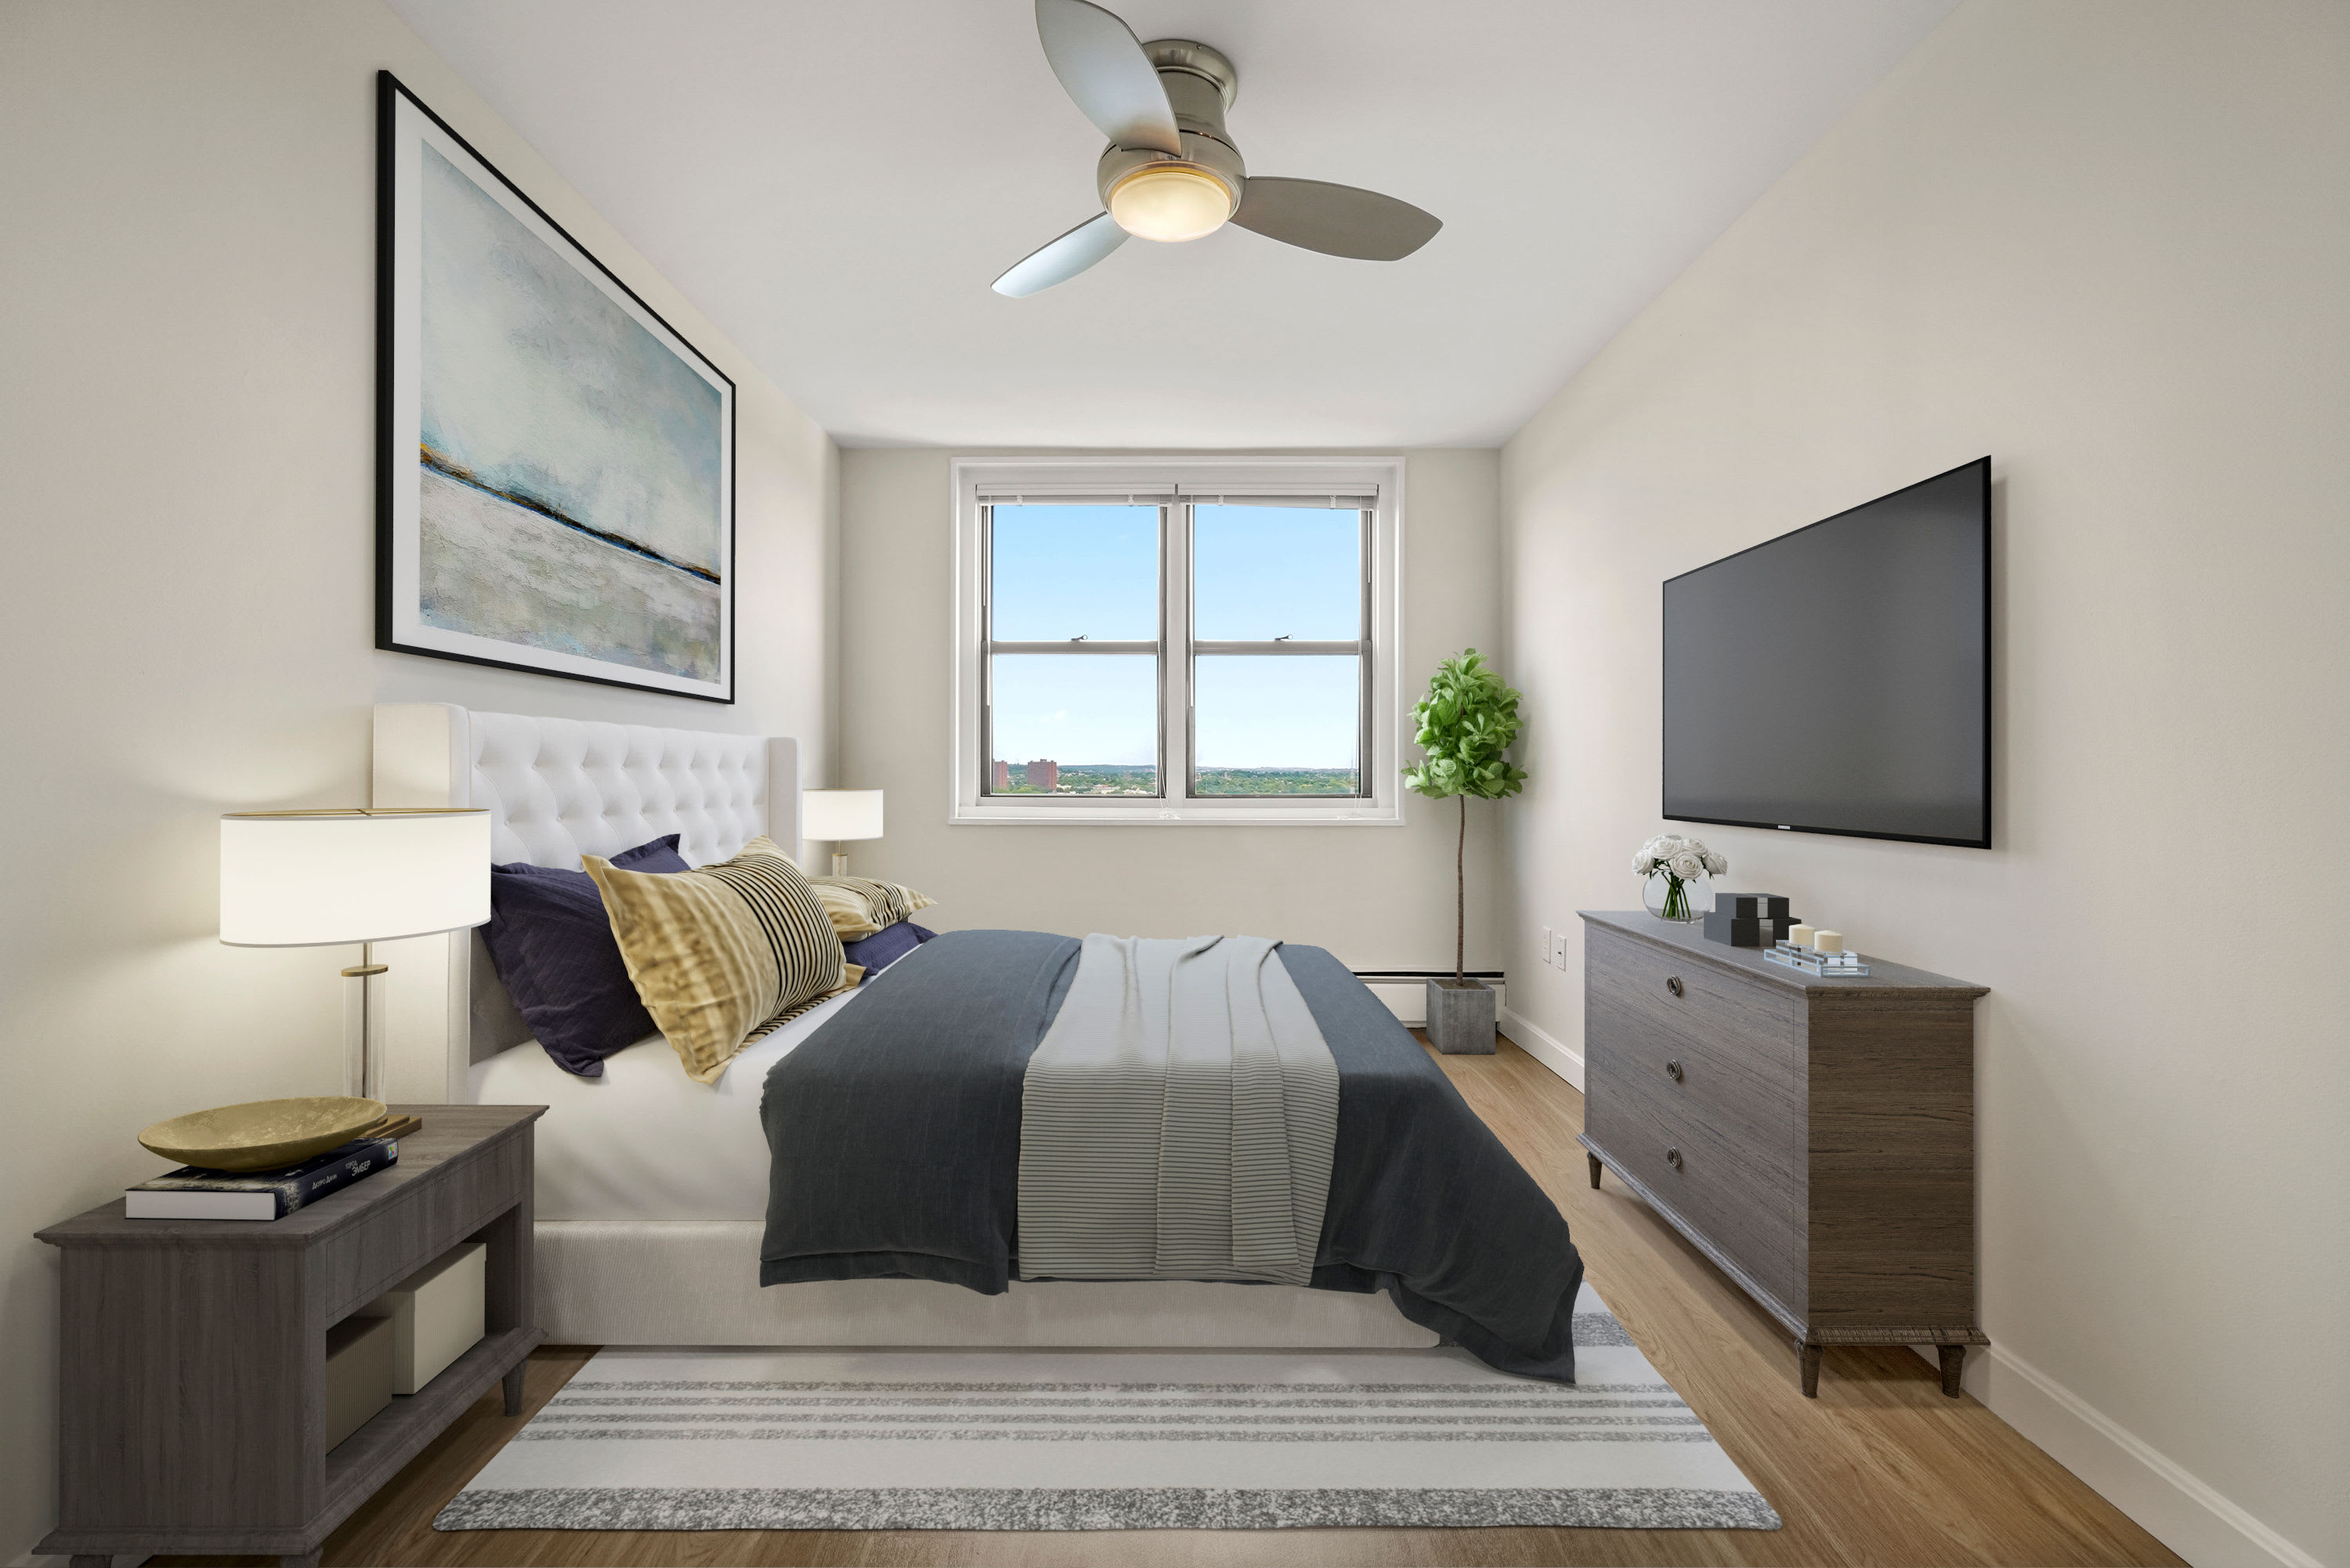 Bedroom at Apartments in Cambridge, Massachusetts